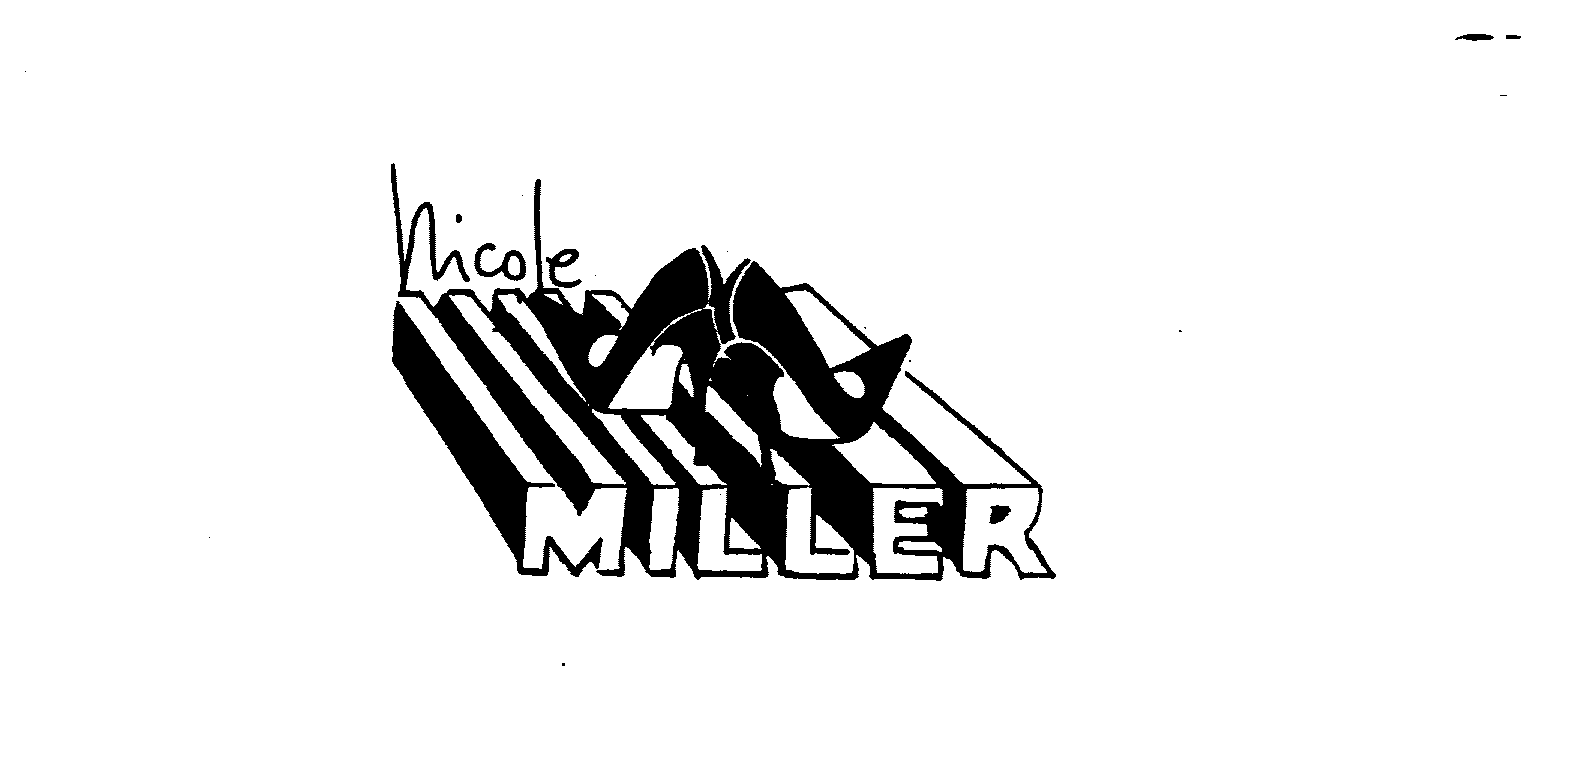 NICOLE MILLER